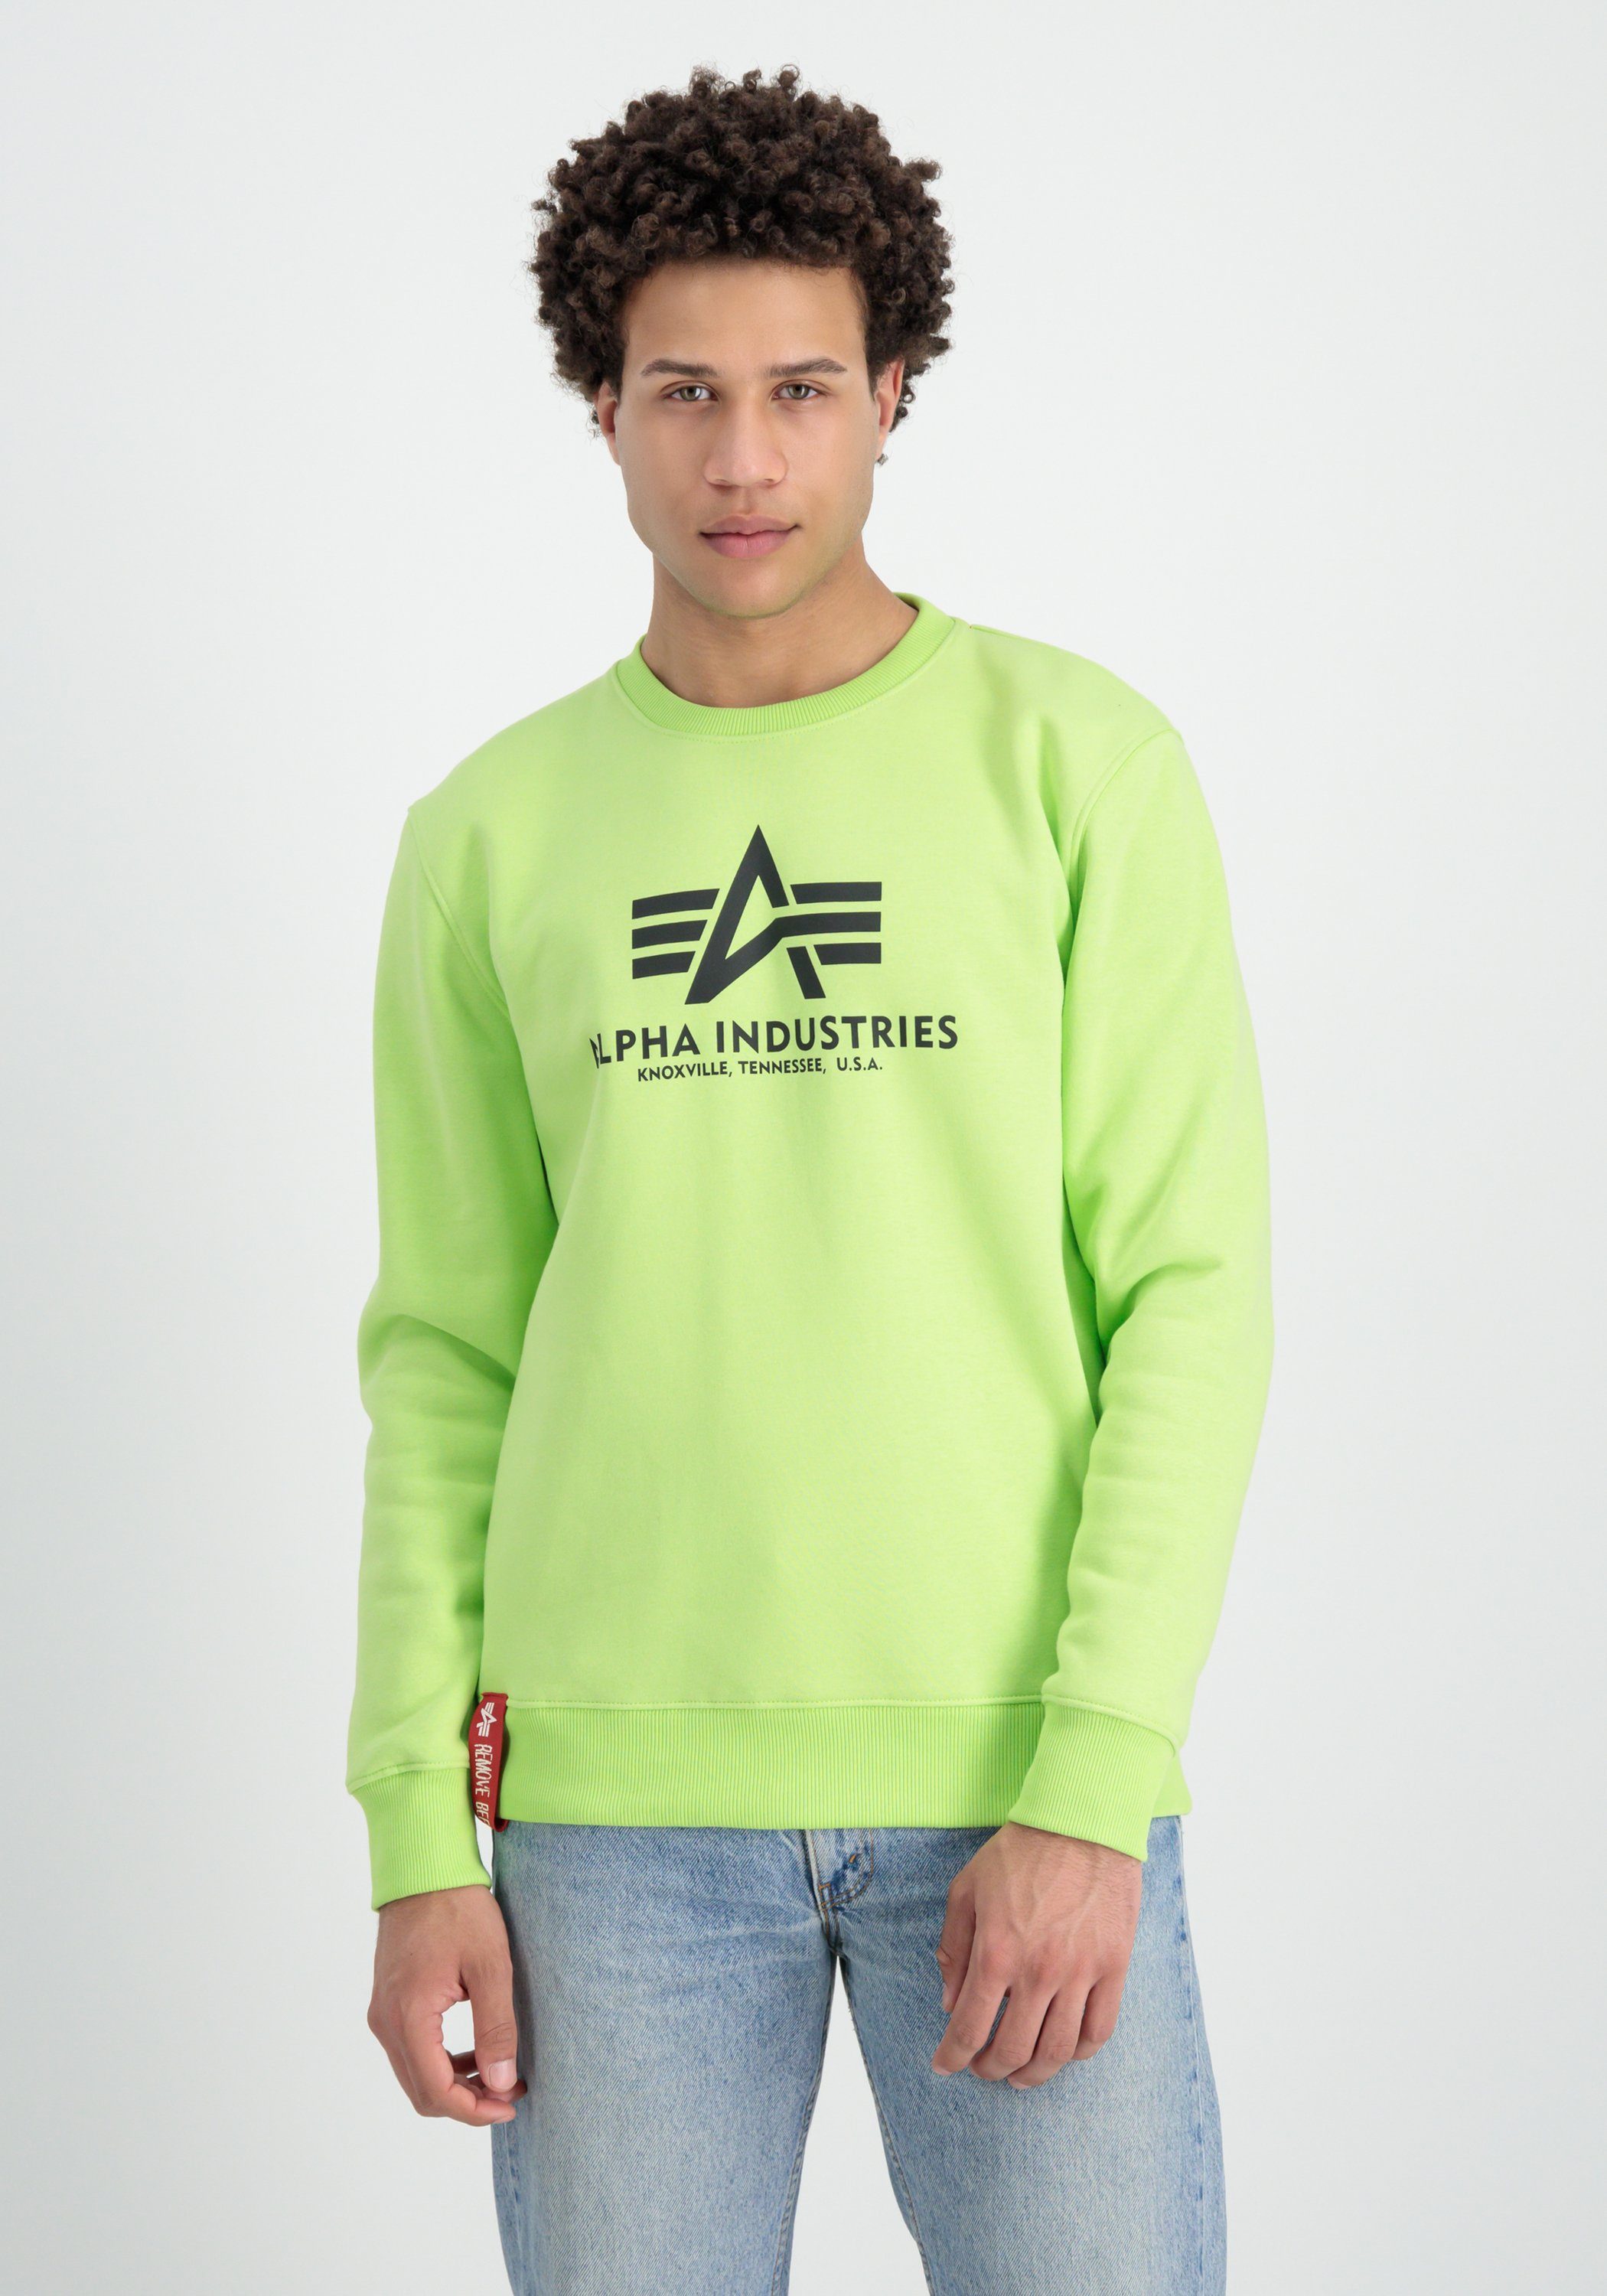 Sweater Sweater Industries Men Basic hornet green Alpha Sweatshirts - Industries Alpha